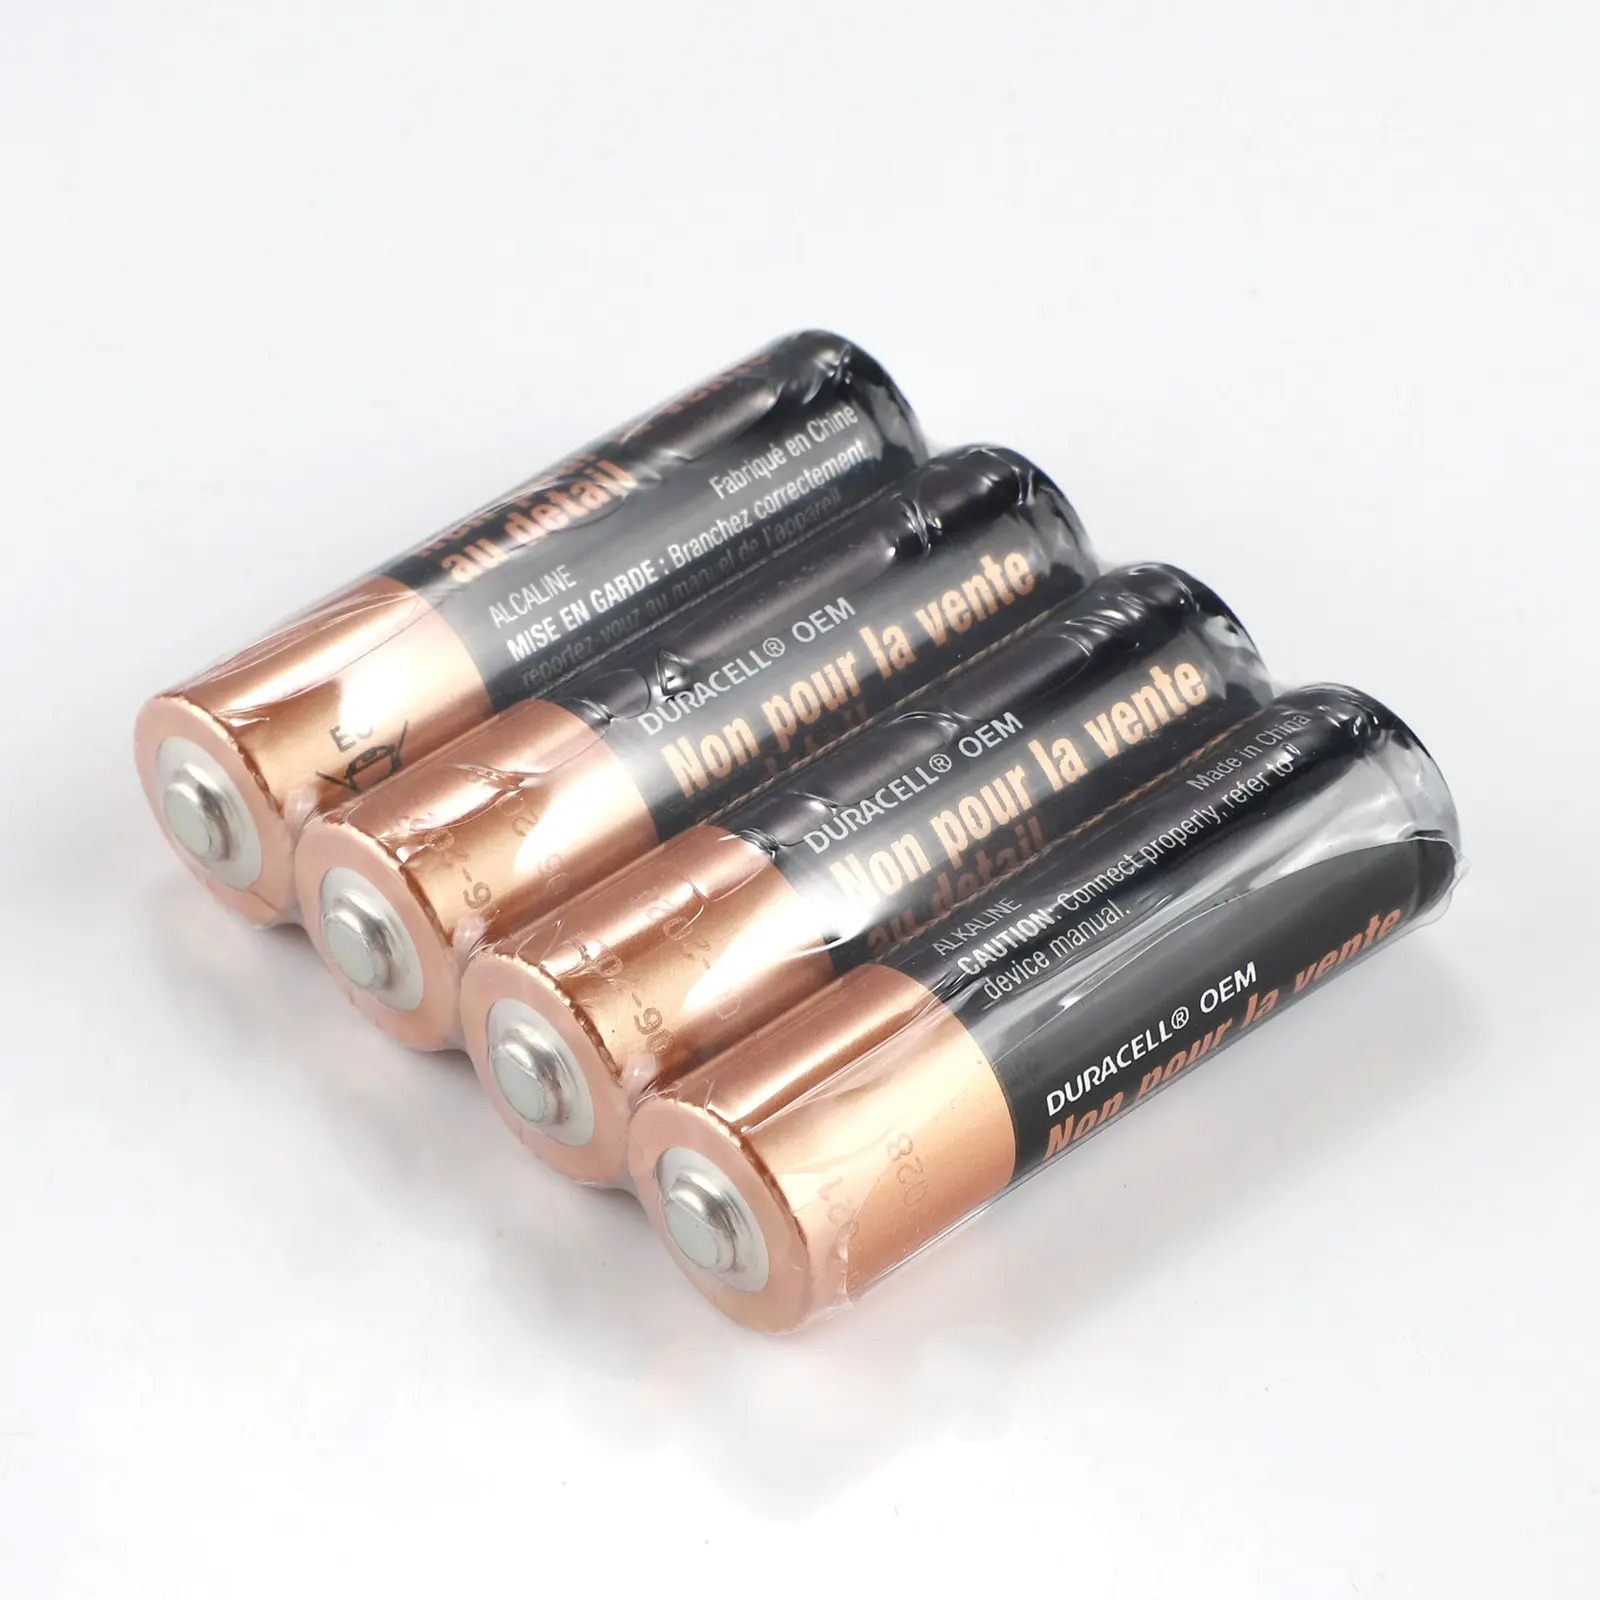 For DuracelI LR6 AA 1.5V Alkaline Primary Battery 4pcs Industrial Package